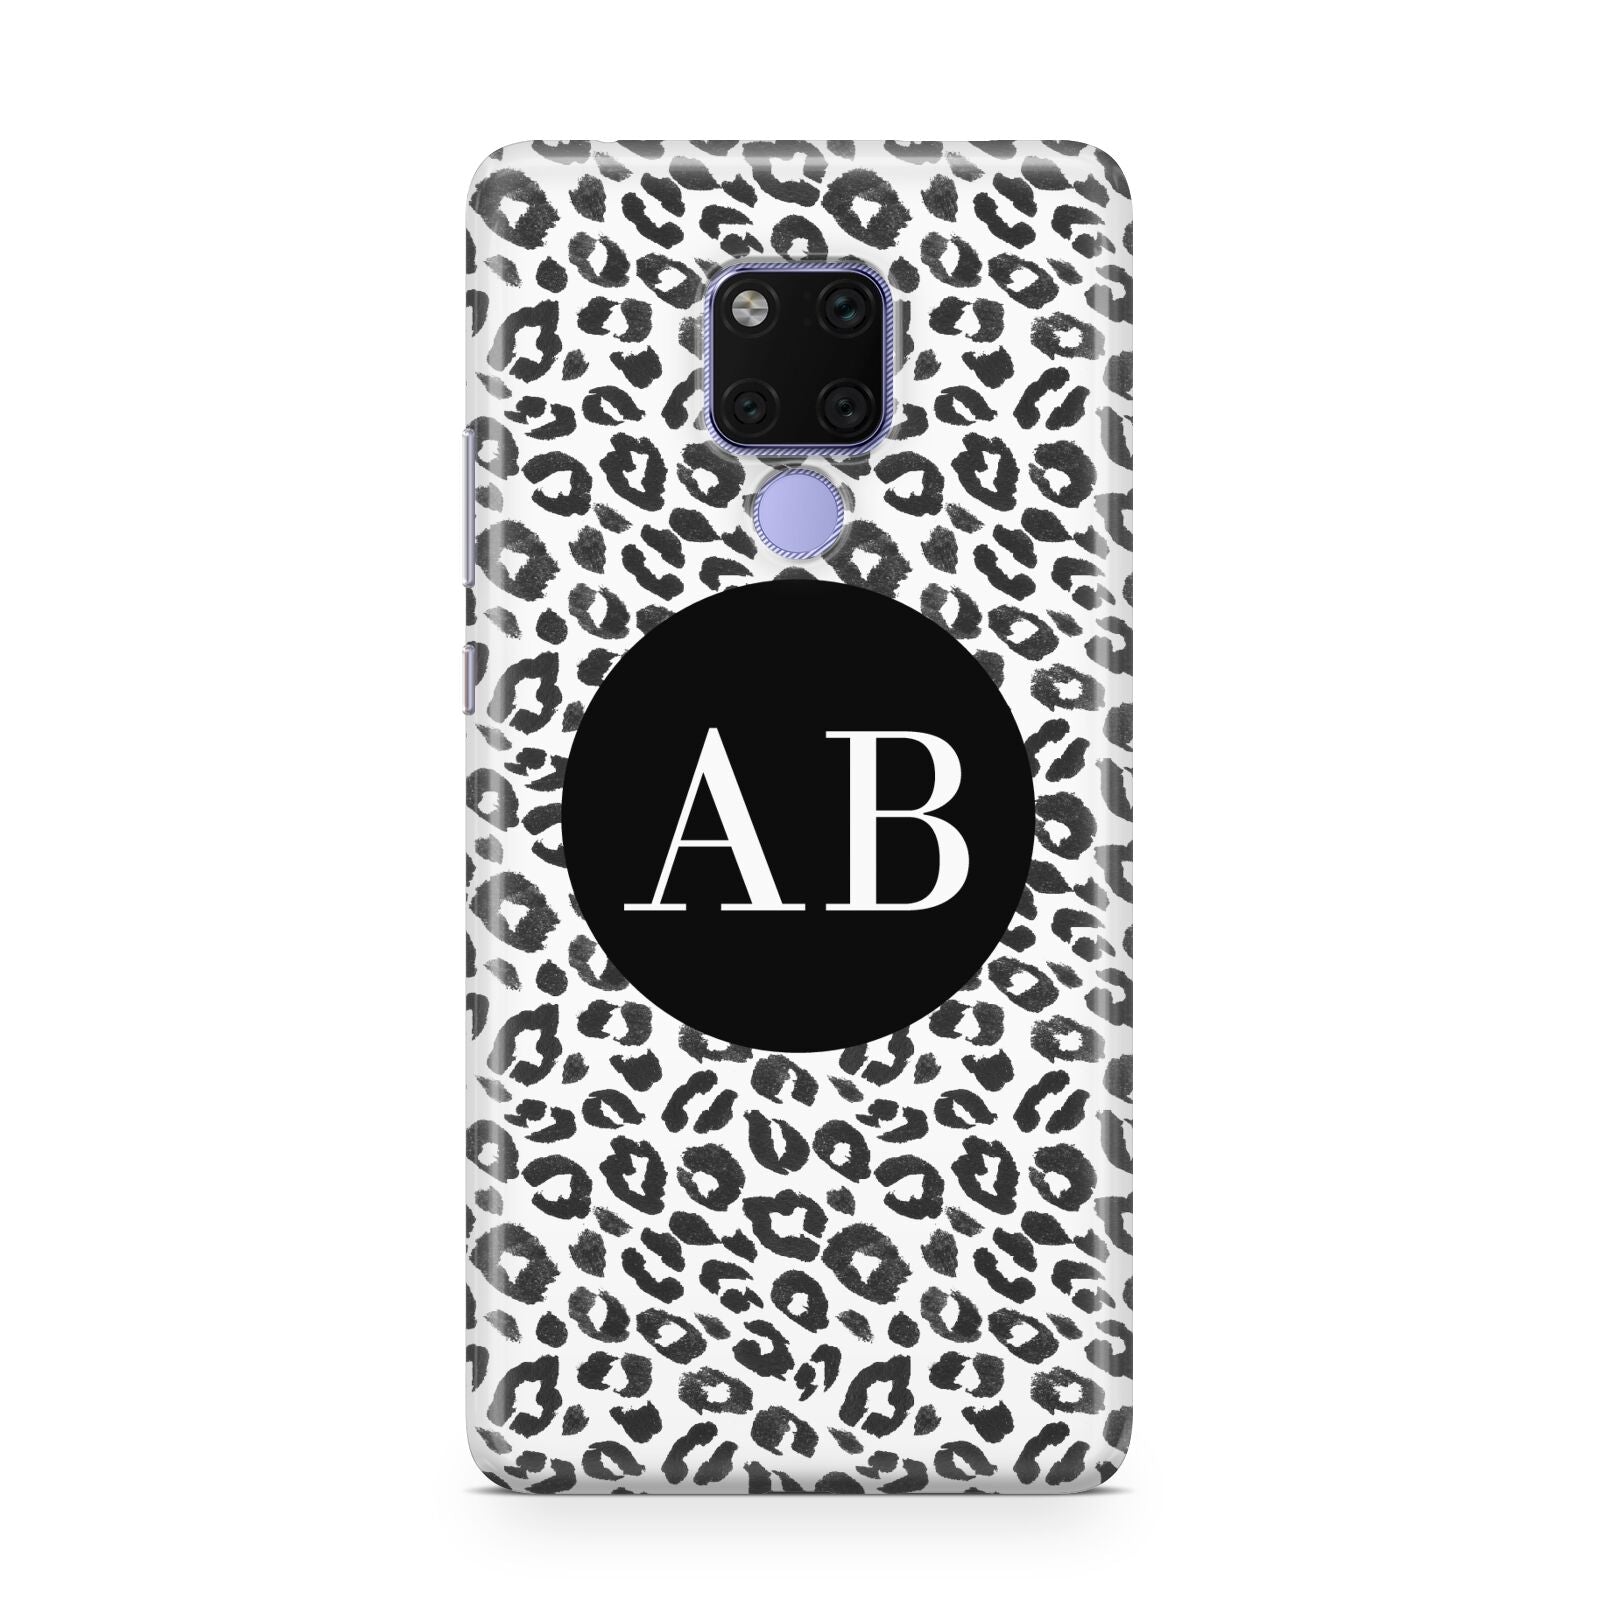 Leopard Print Black and White Huawei Mate 20X Phone Case